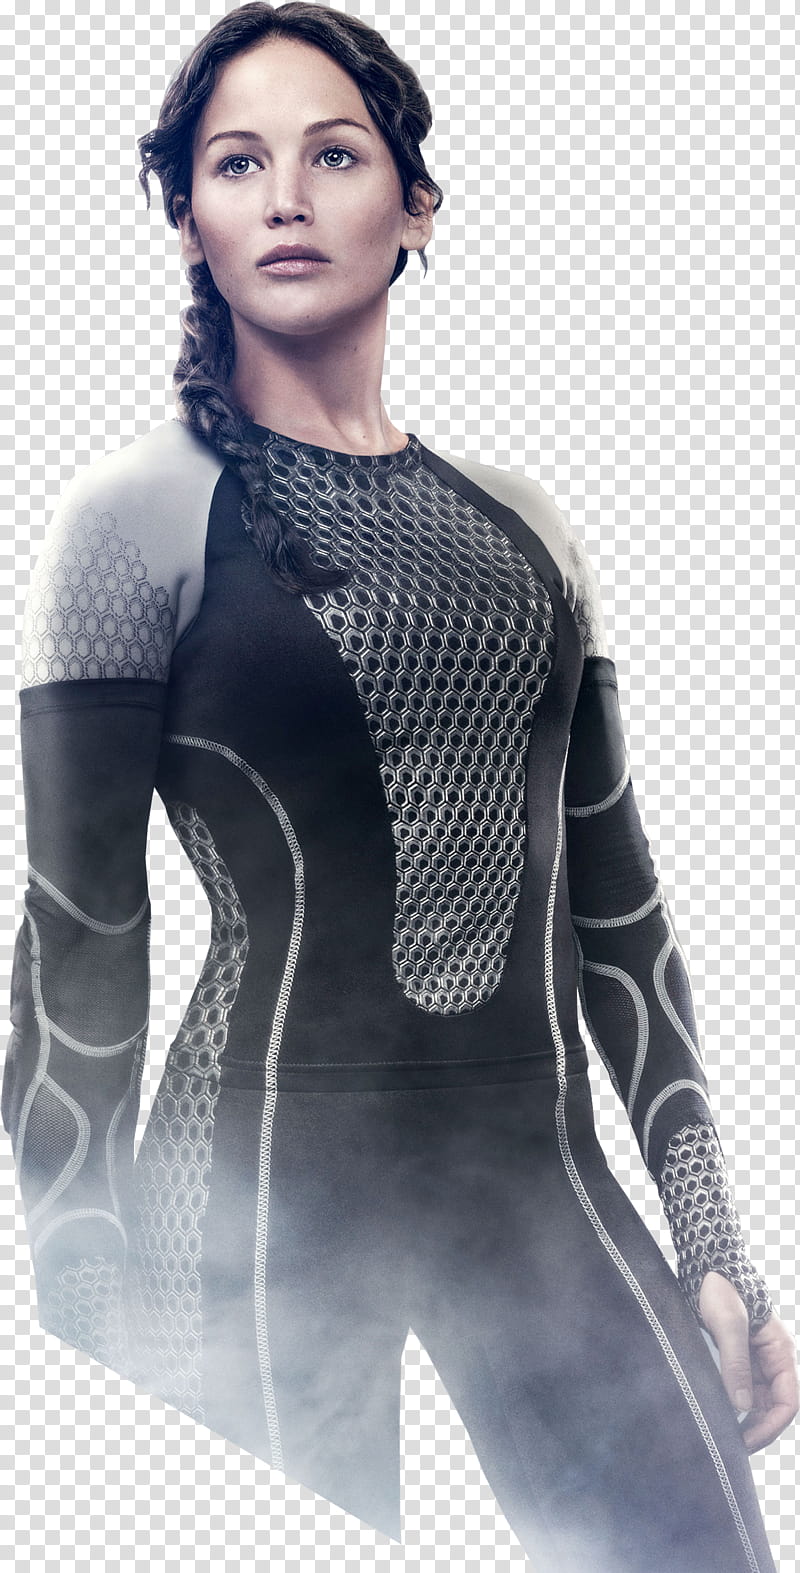 Jennifer Lawrence as Katniss Everdeen transparent background PNG clipart